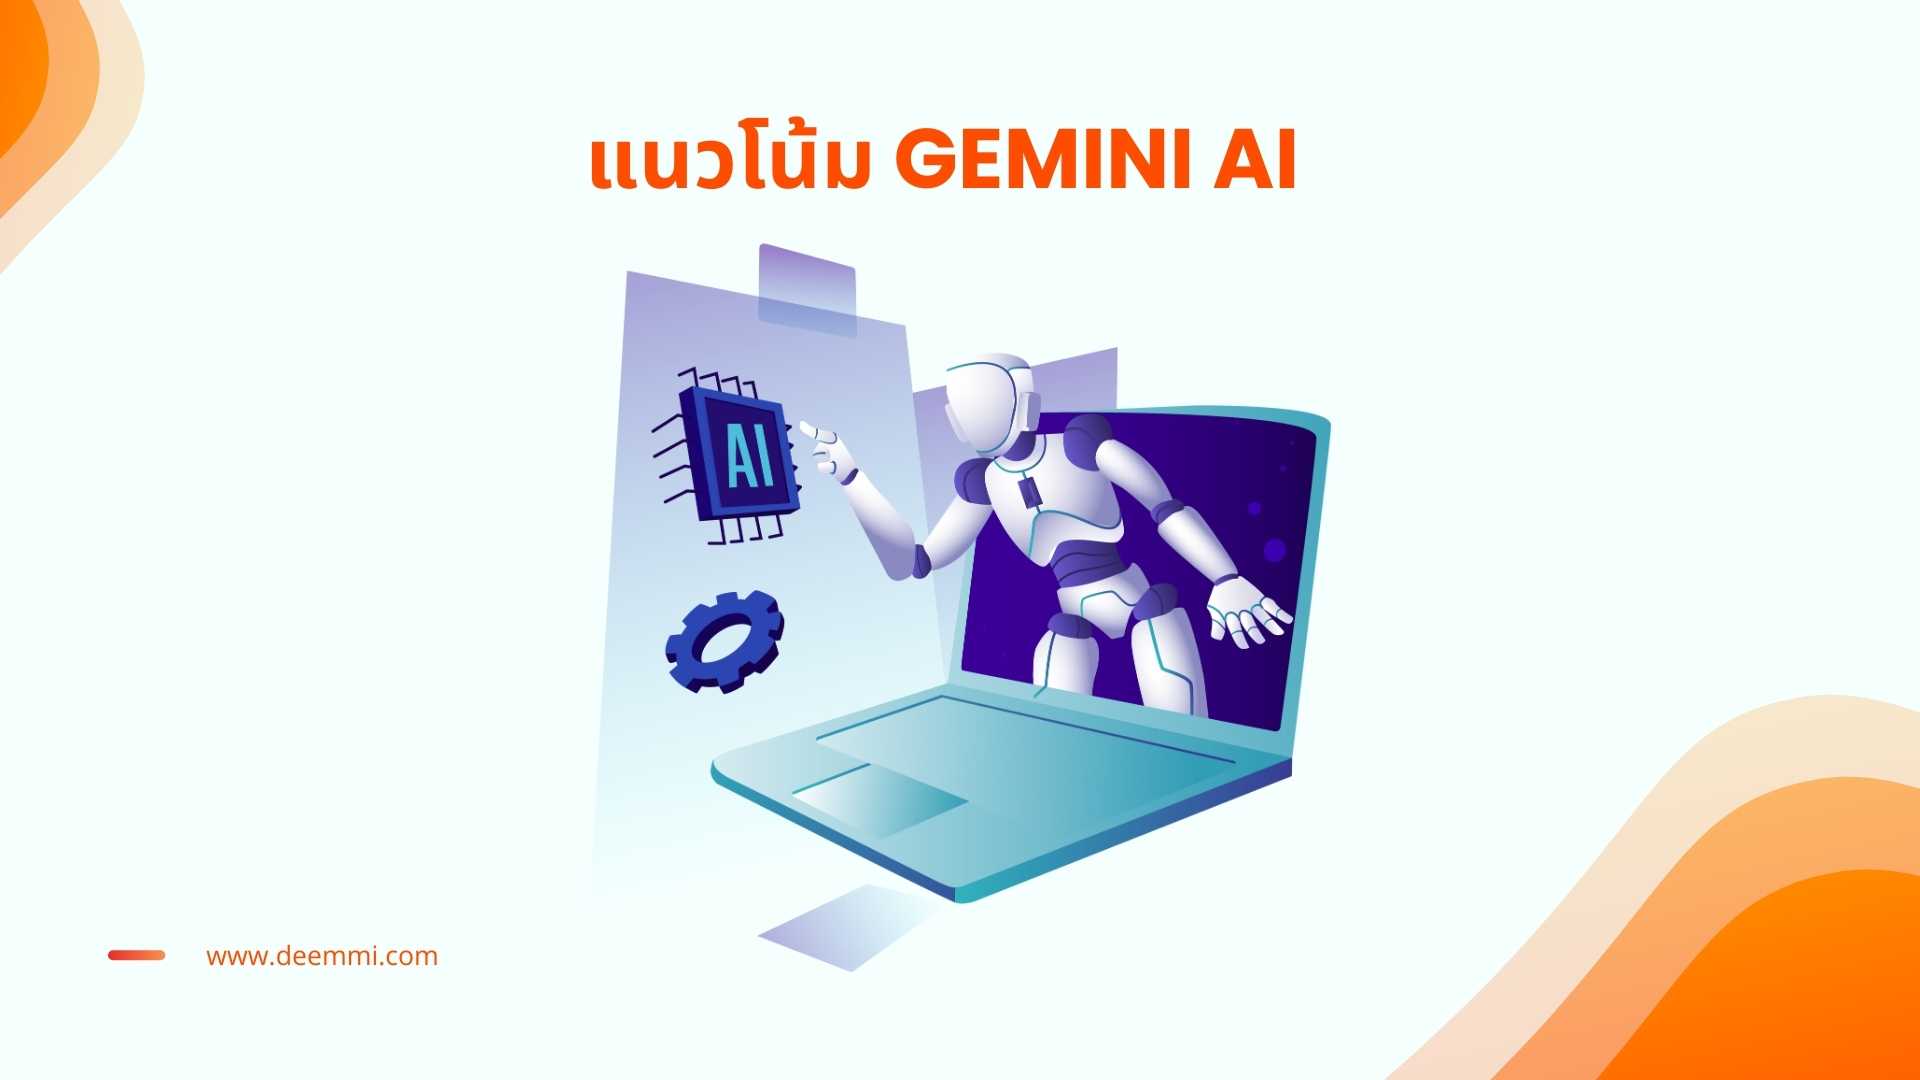 Gemini AI ผู้ช่วยวิเคราะห์ข้อมูลและเข้าใจลูกค้าได้อย่างลึกซึ้ง_Gemini-Generative-AI_future_trend